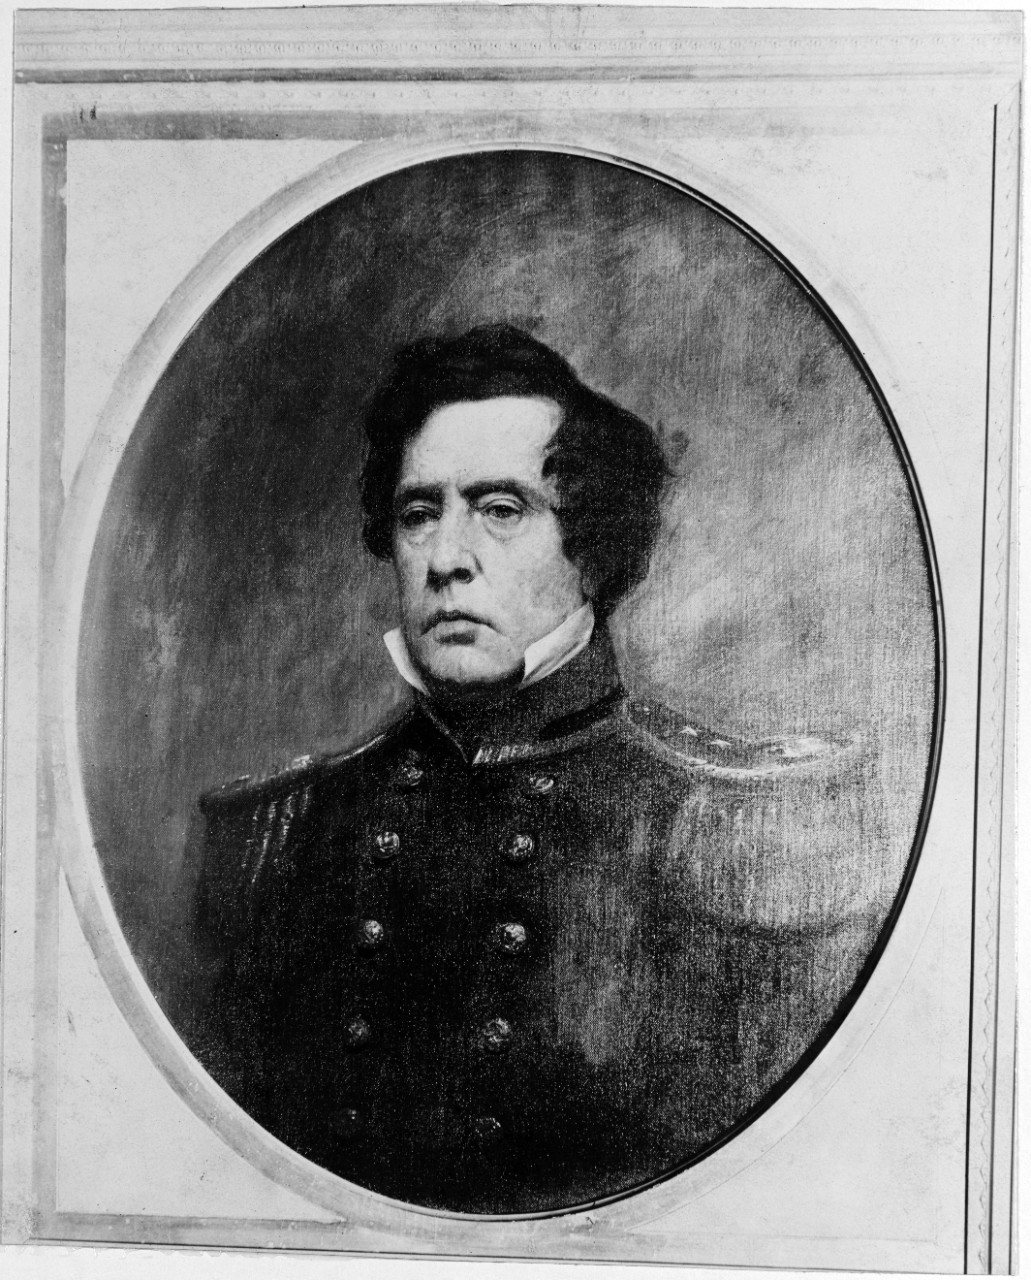 Captain Matthew C. Perry, USN